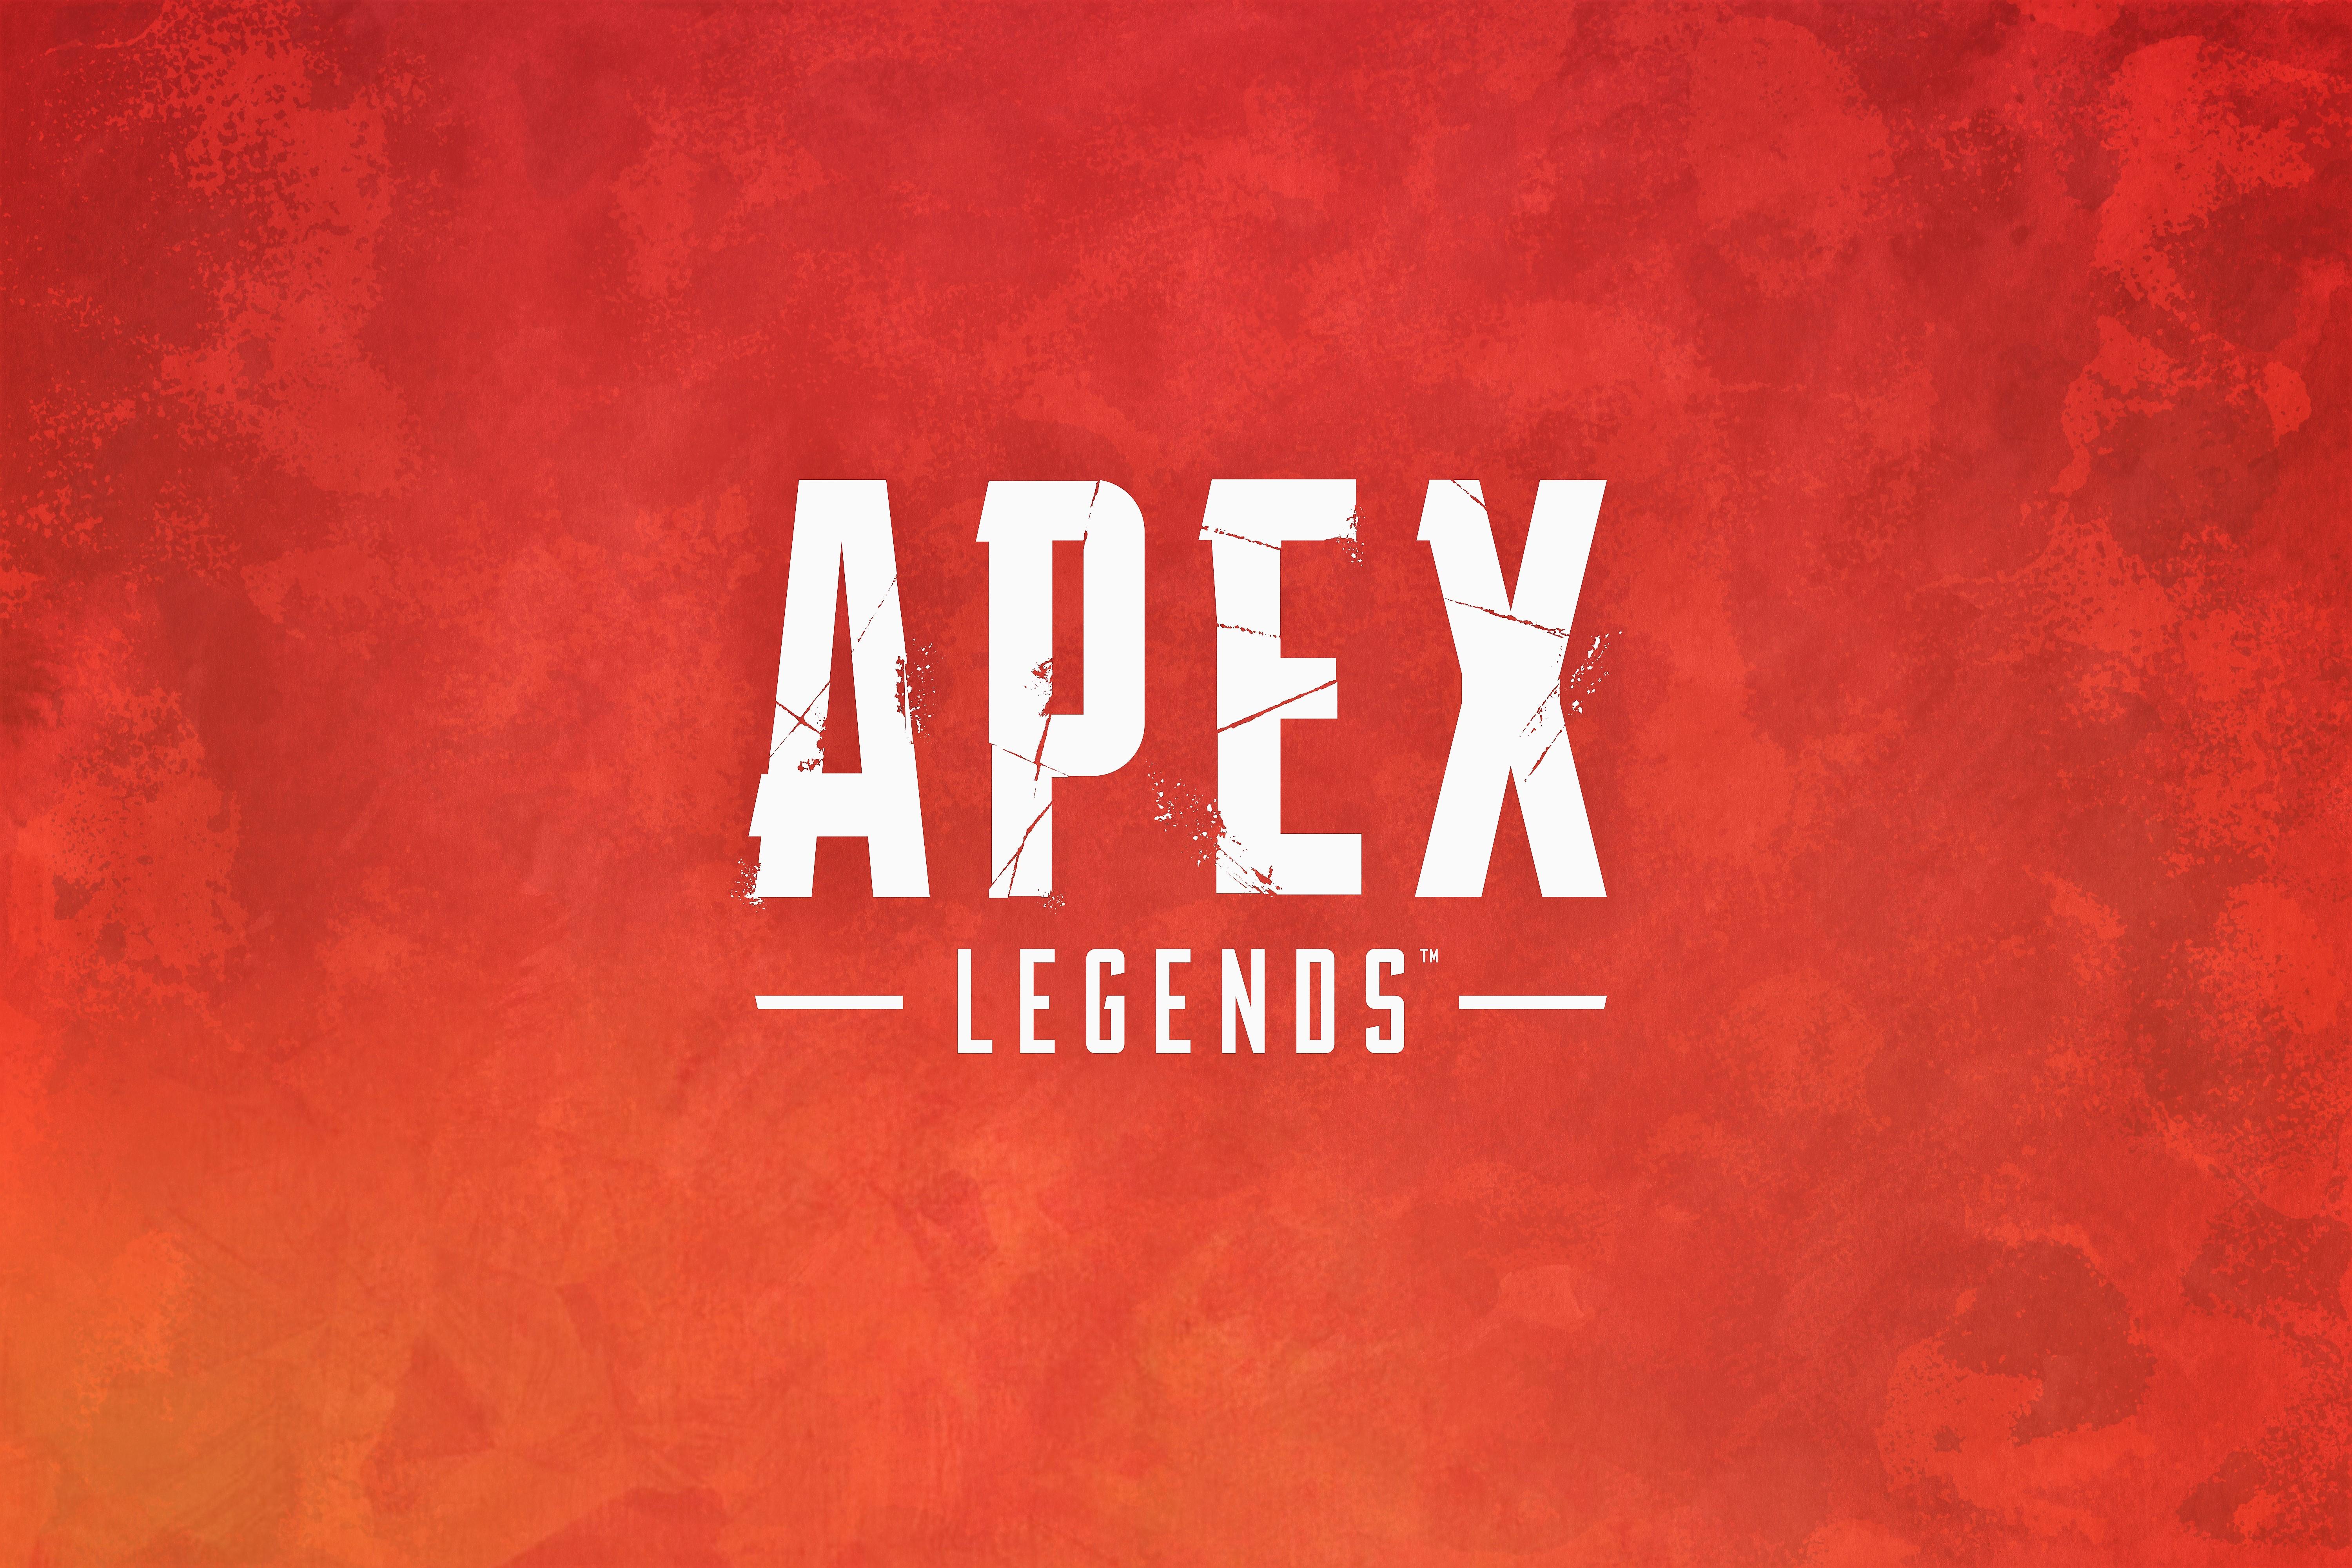 Apex Legends 4K Wallpapers  Latest Apex Legends 4K Backgrounds   WallpaperTeg